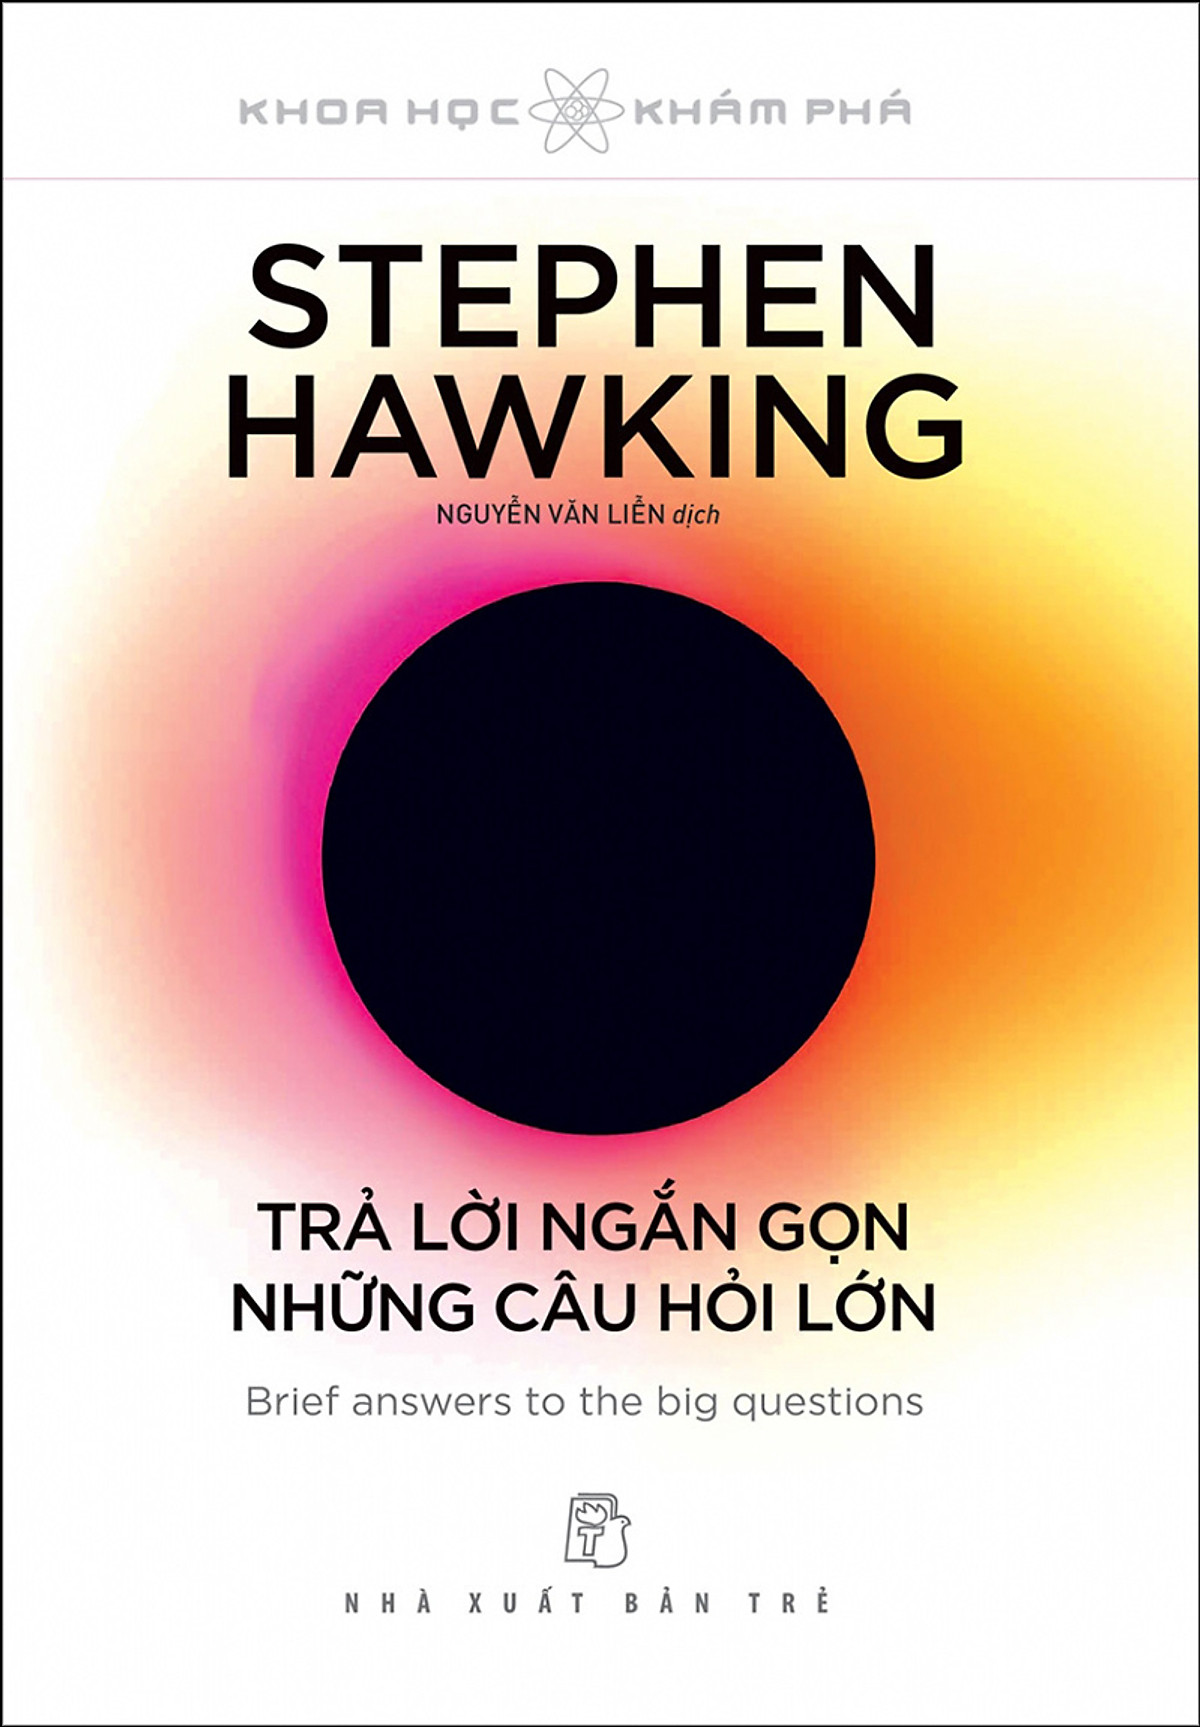 KHKP. Trả lời ngắn gọn những câu hỏi lớn (Stephen Hawking)